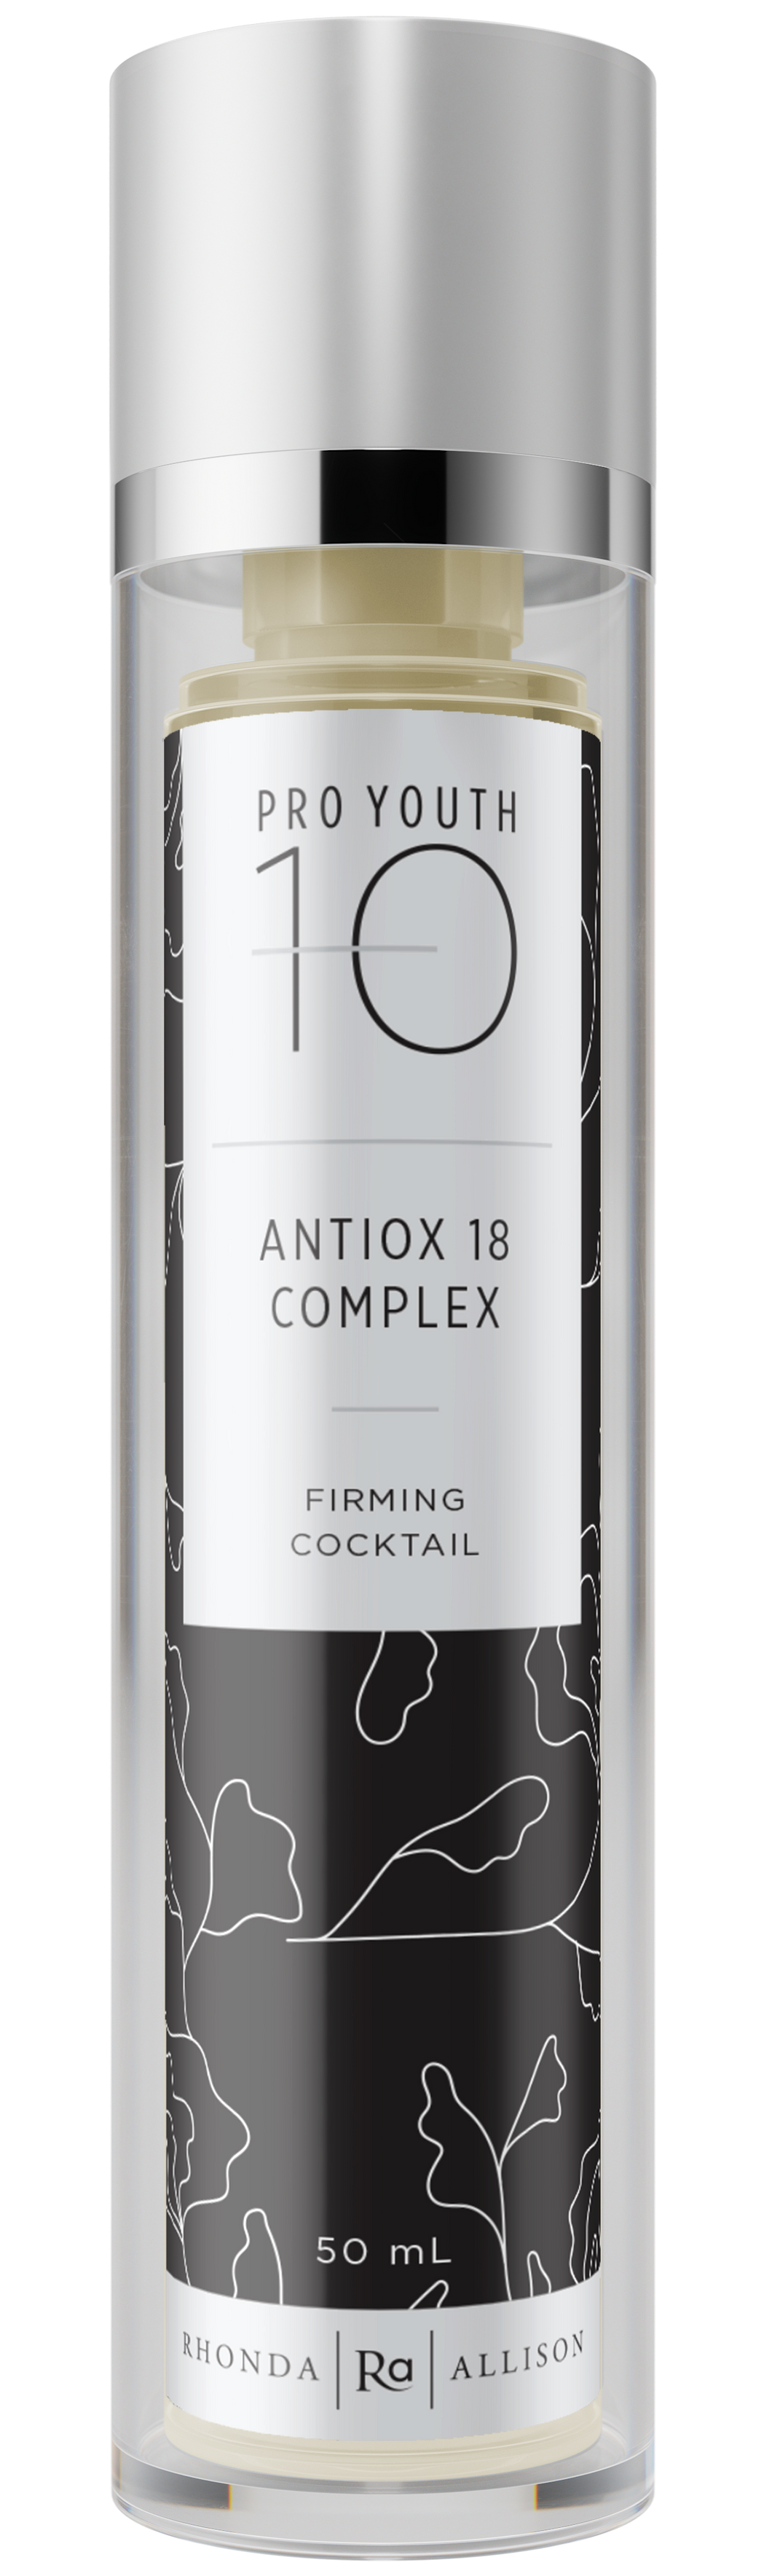 Antiox 18 Complex - 50 mL